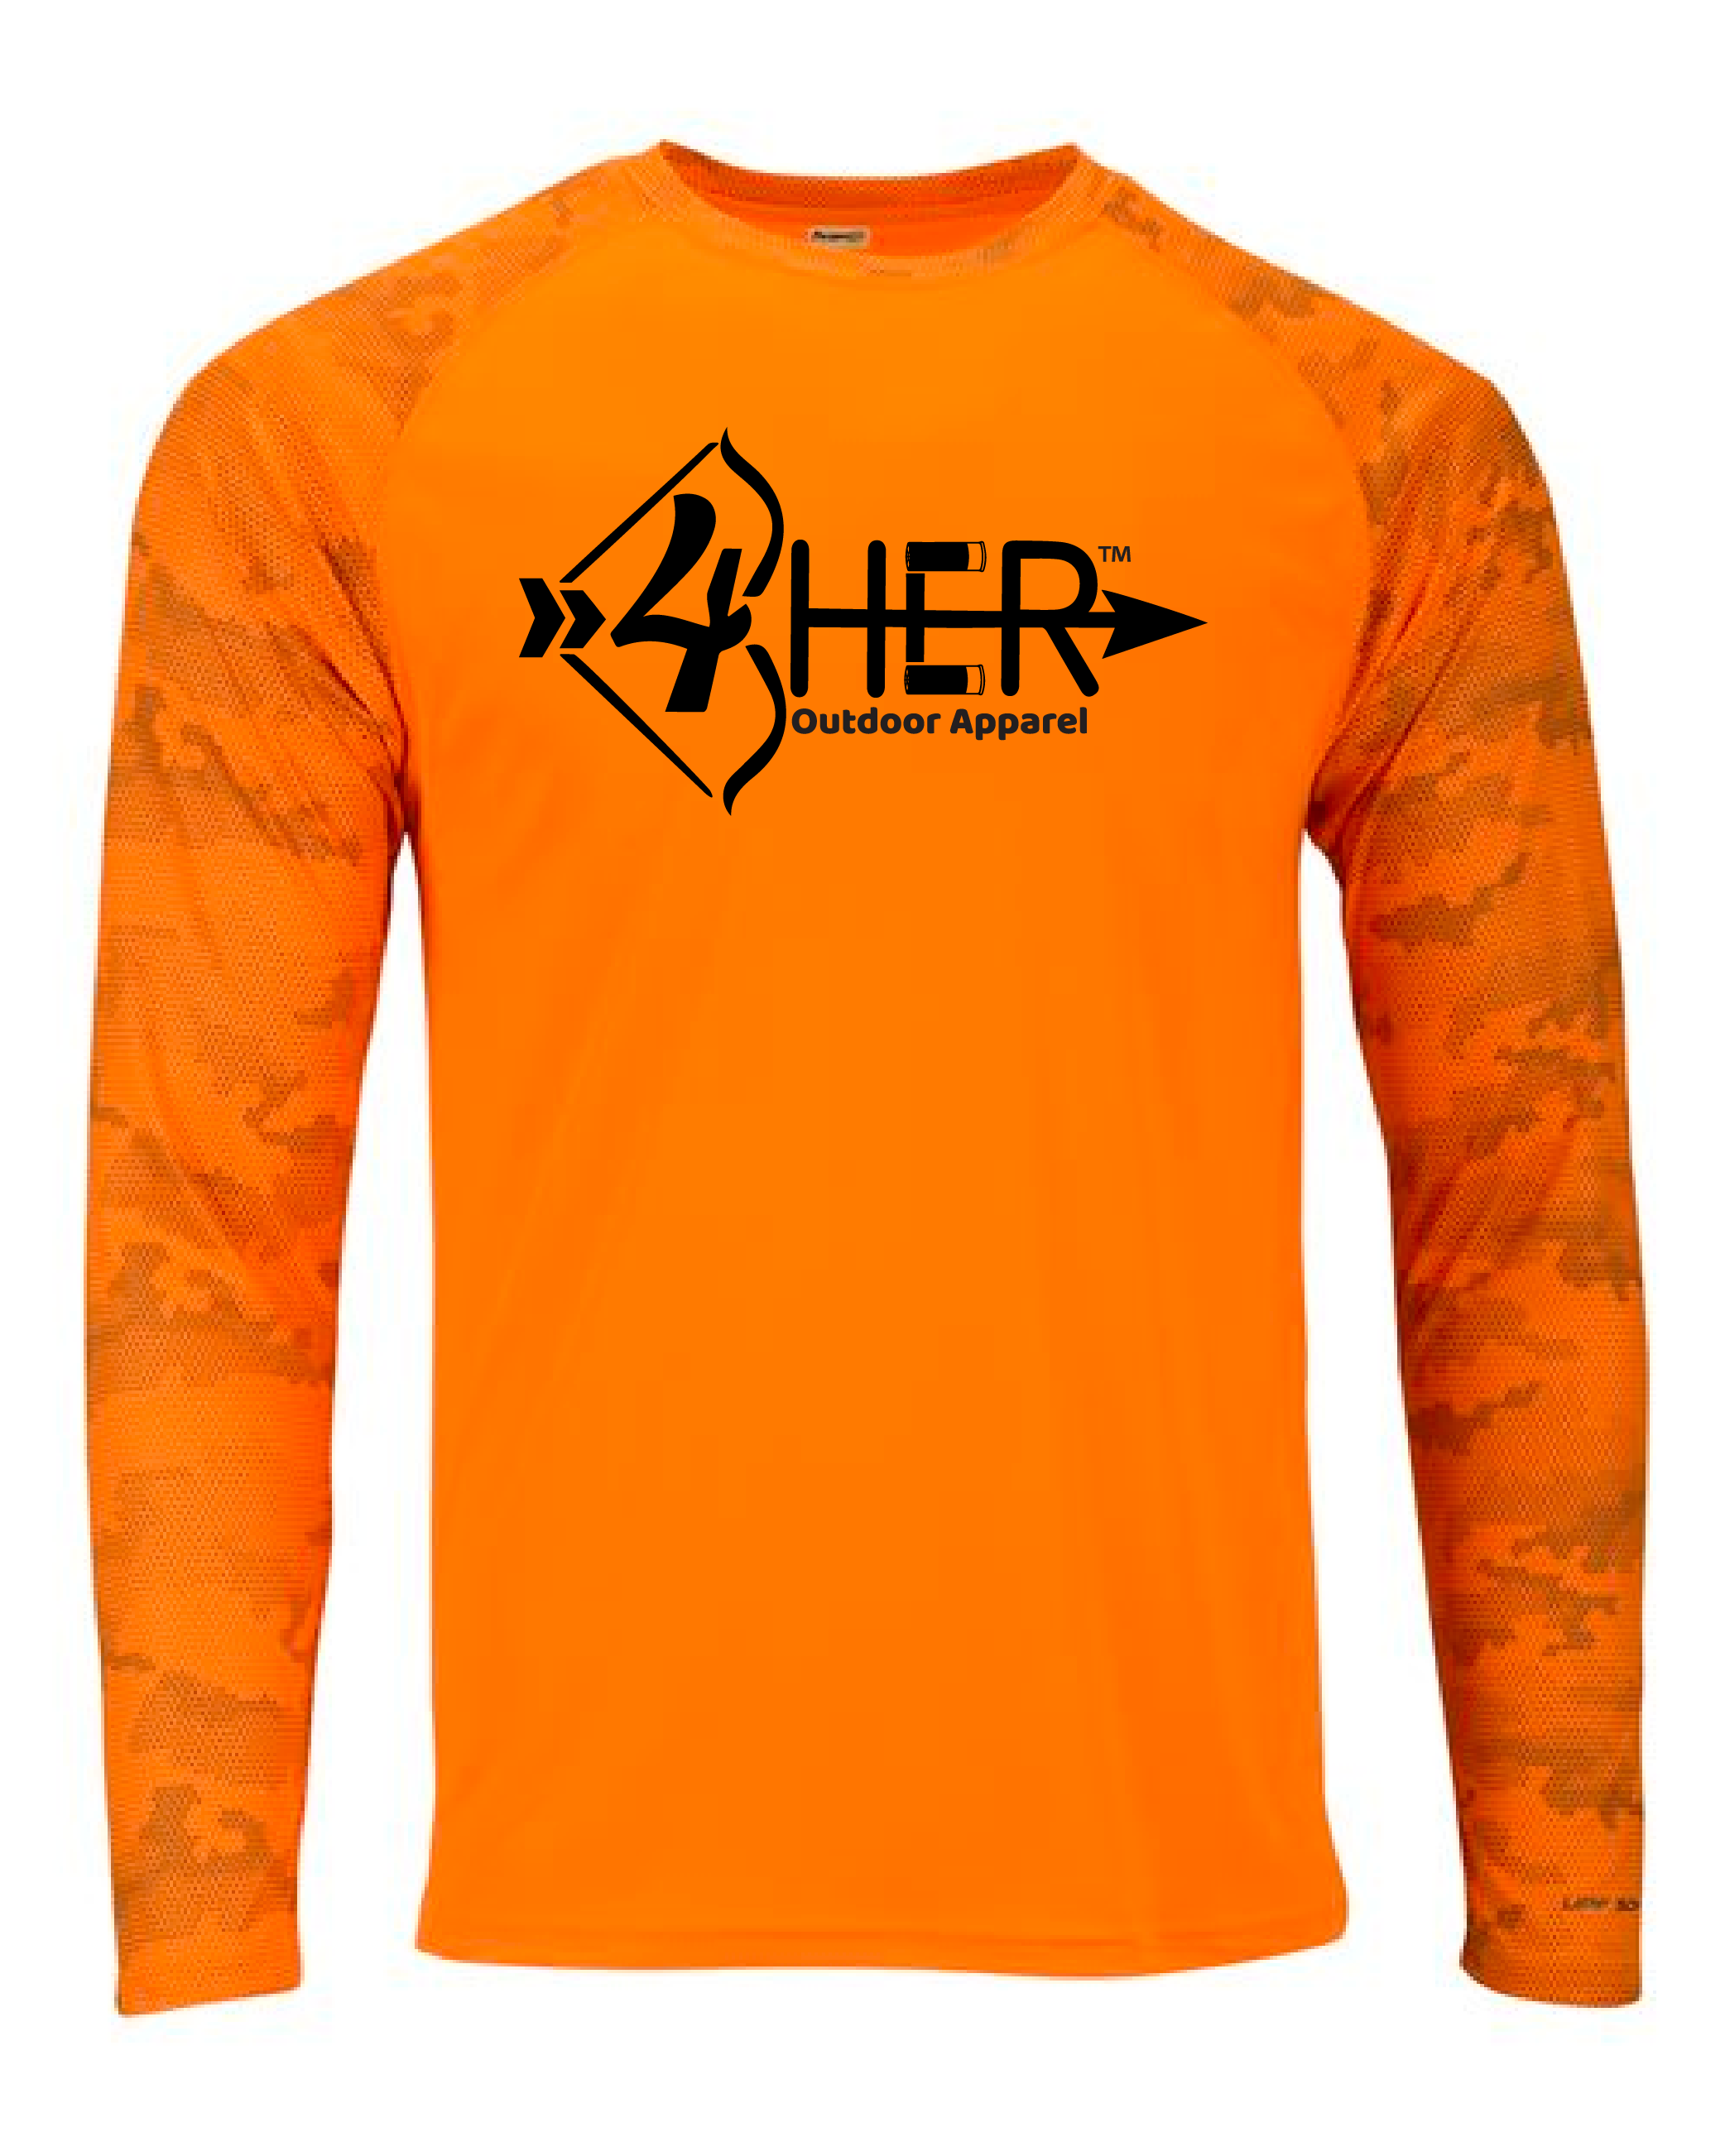 4HER Blaze Orange Camo UV Performance Long Sleeve Shirt